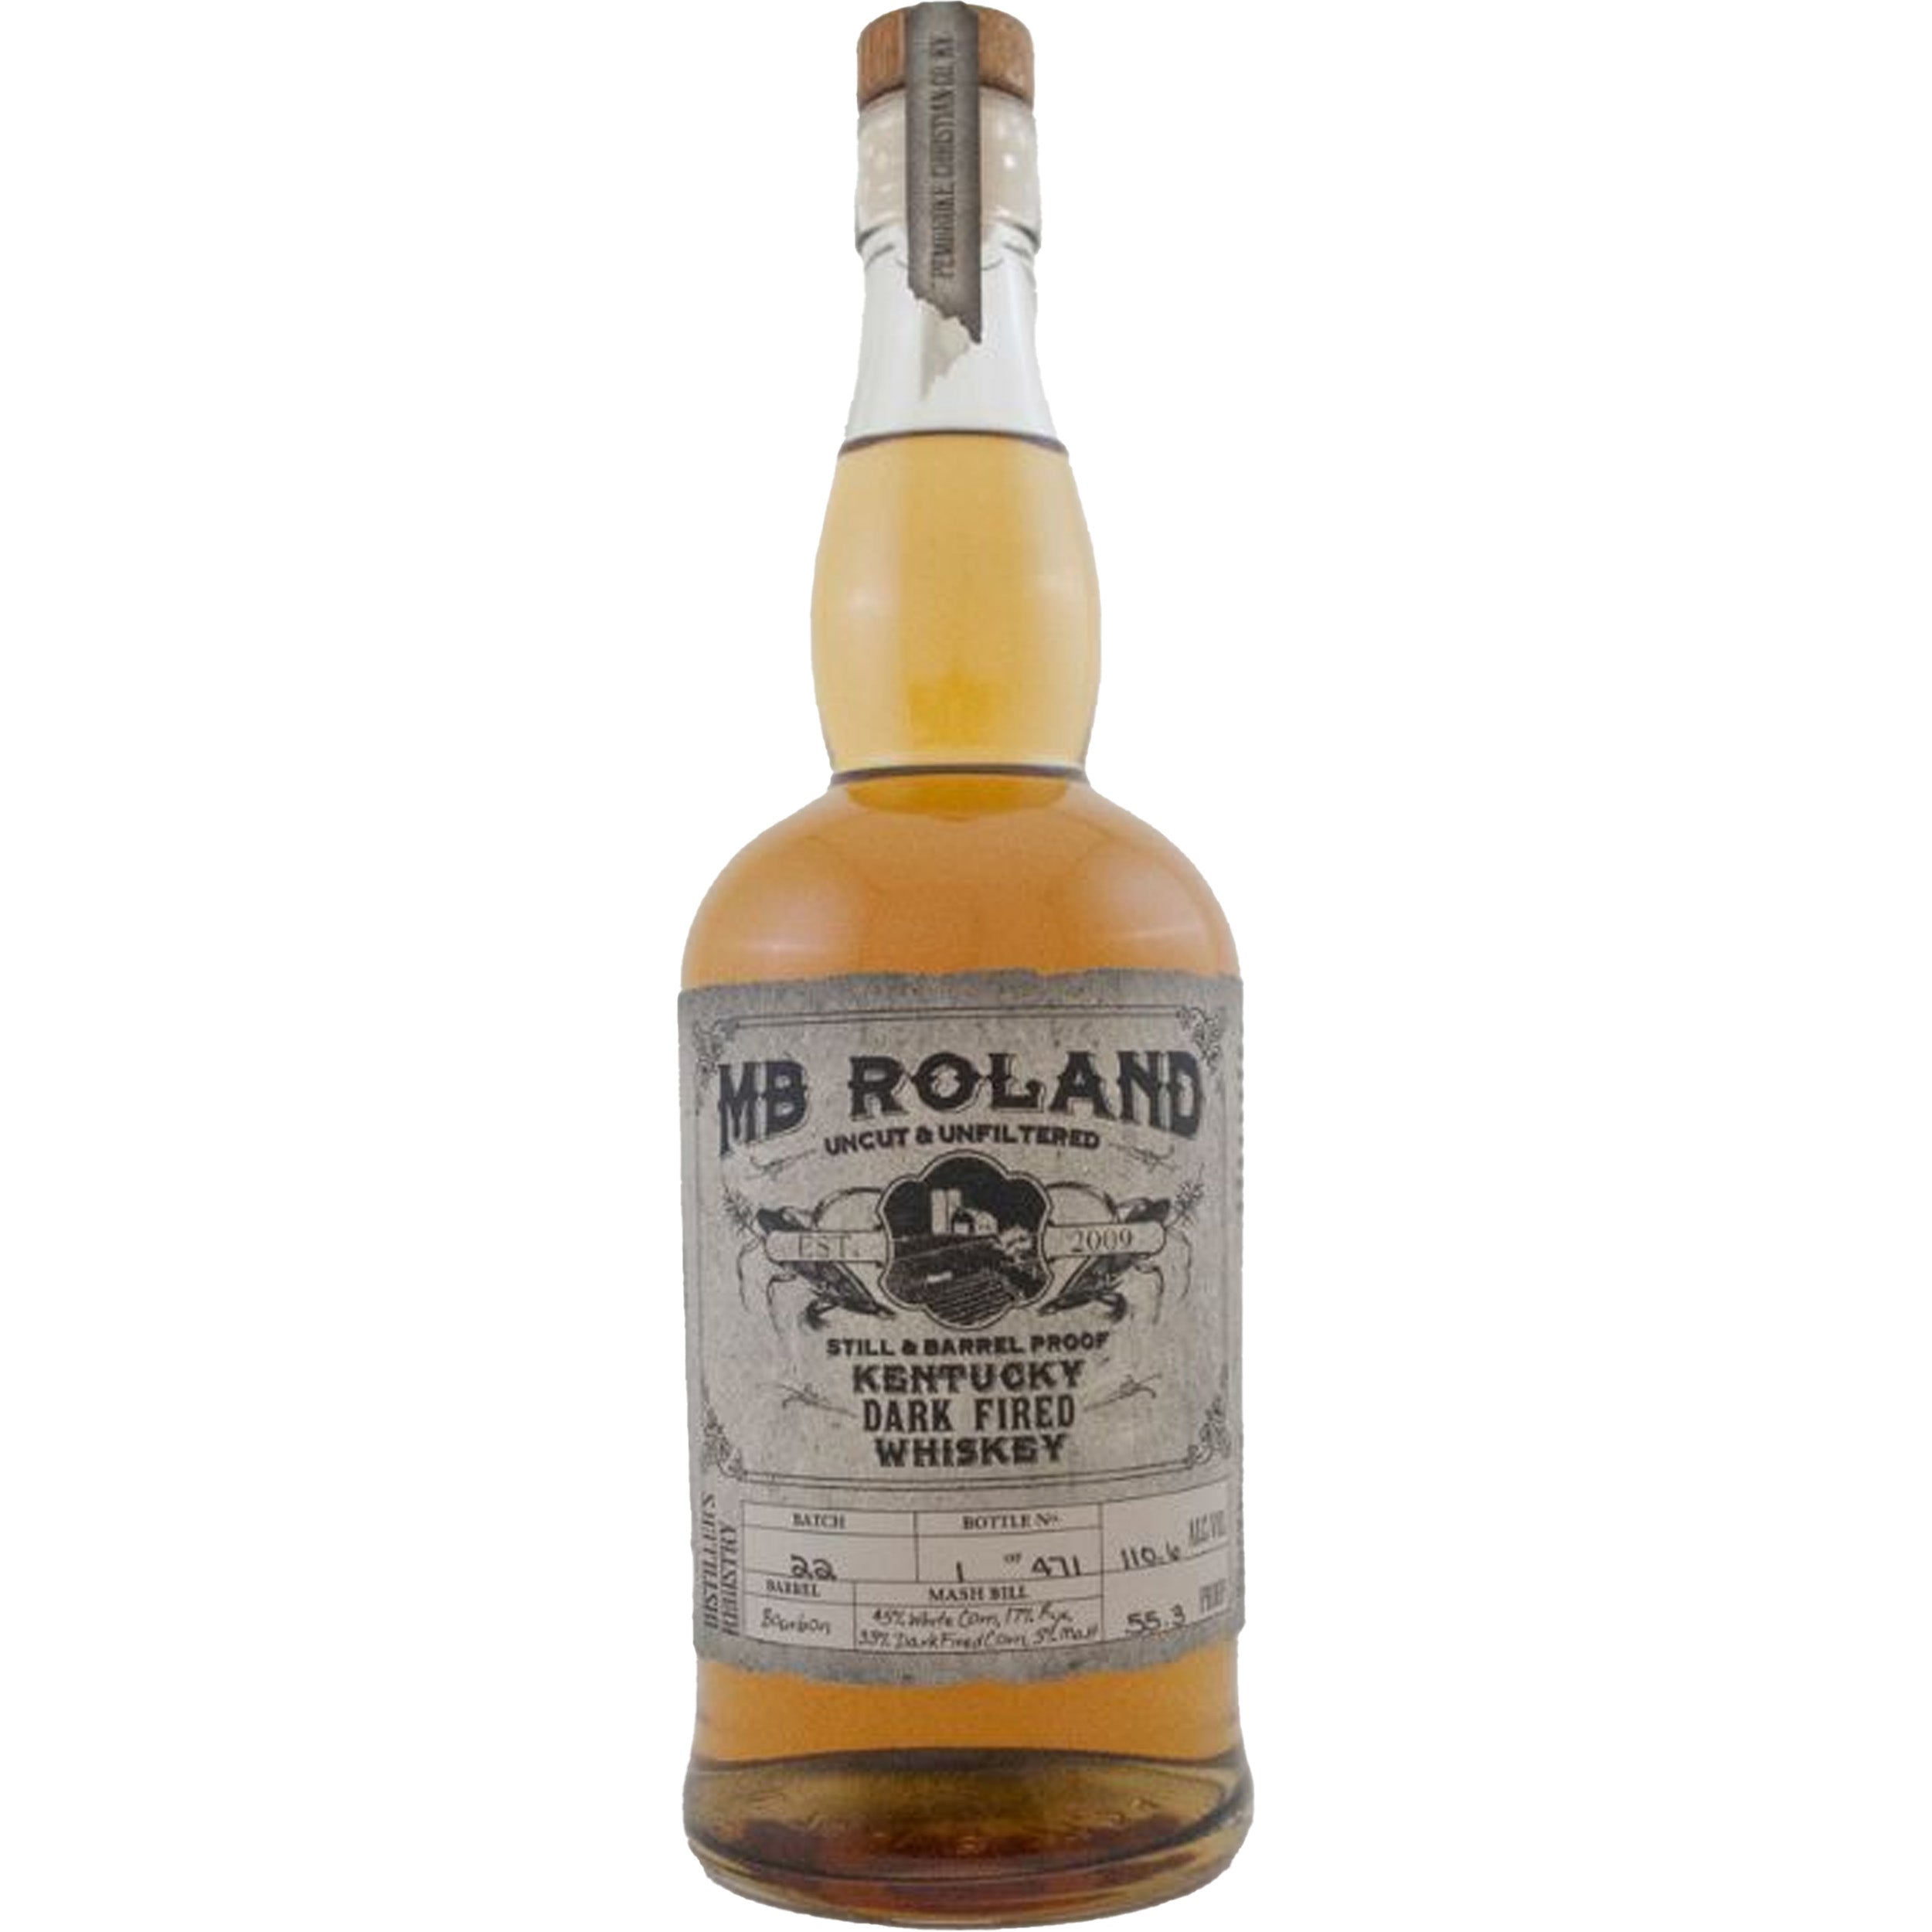 MB Roland Kentucky Dark Fired Whiskey